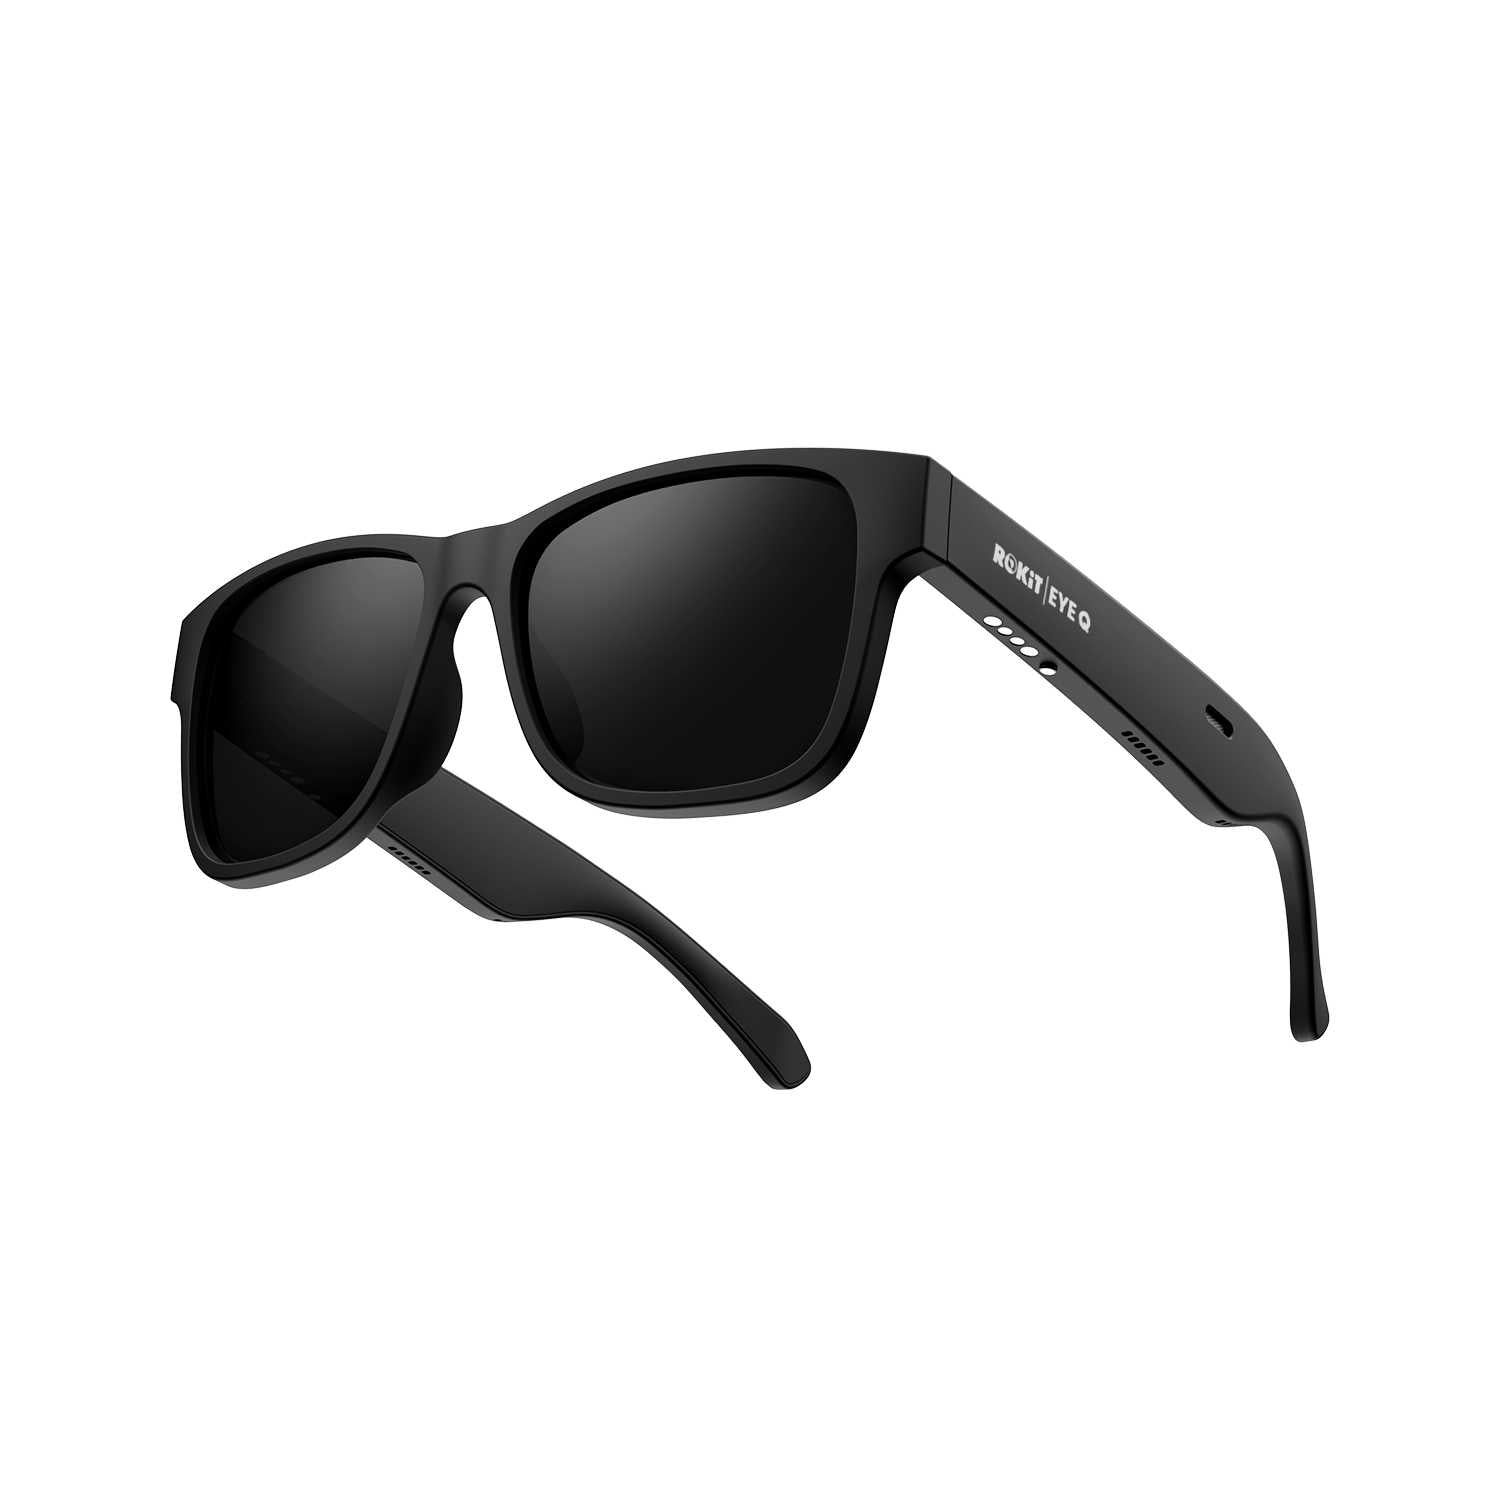 Srinak Aviator Polarized Sunglasses for Men and Algeria